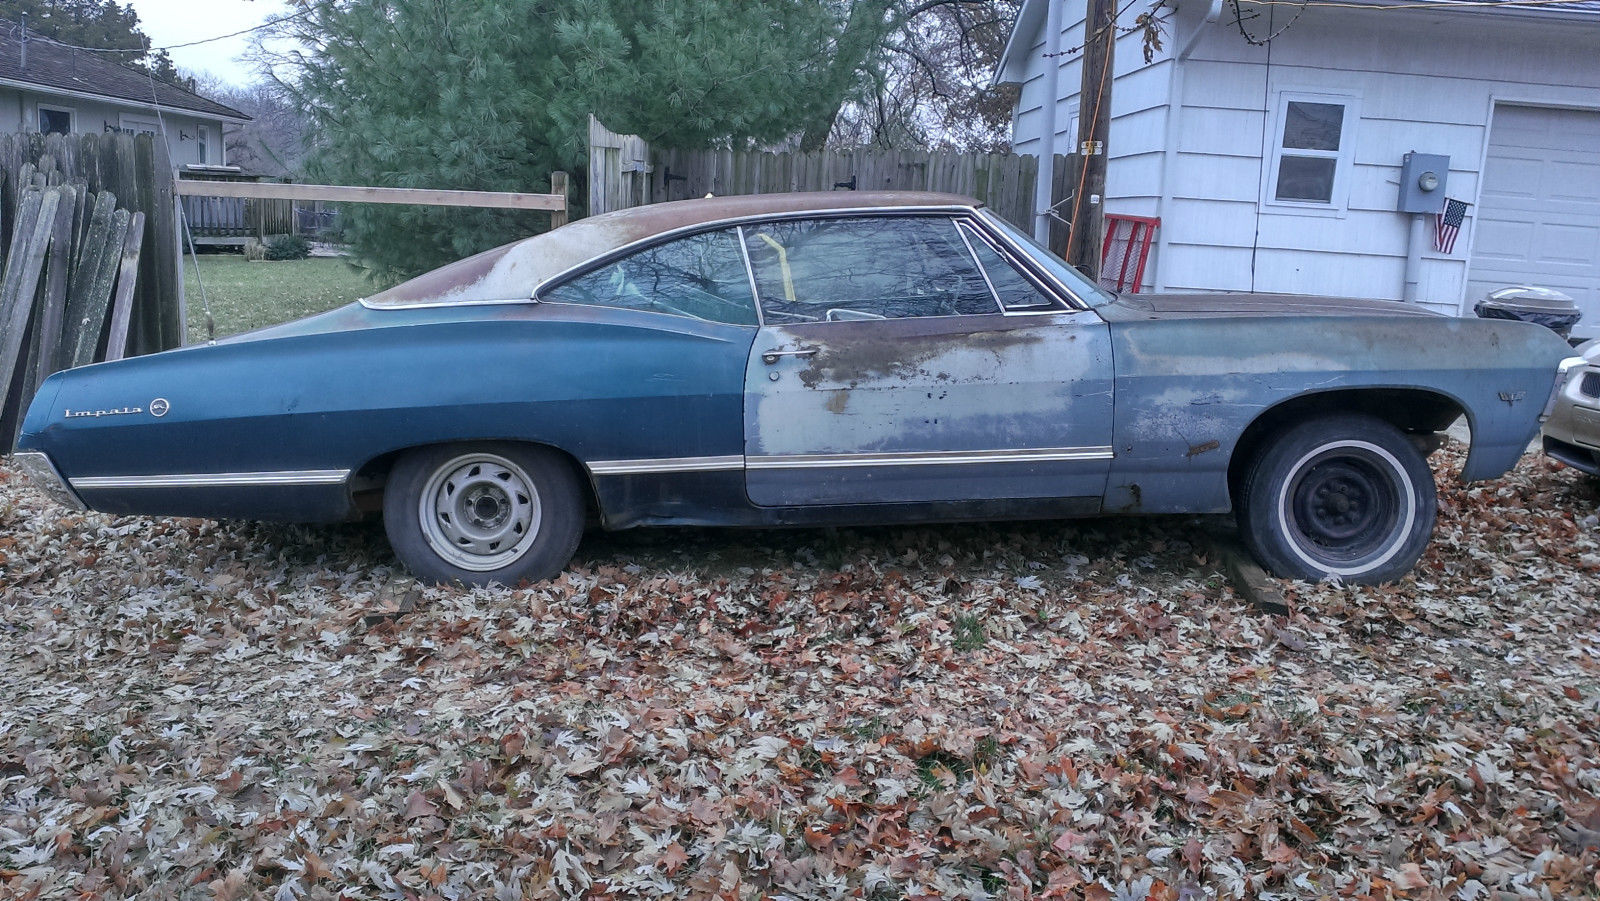 1967 Chevrolet Impala for sale in Baldwin City, Kansas, United States.